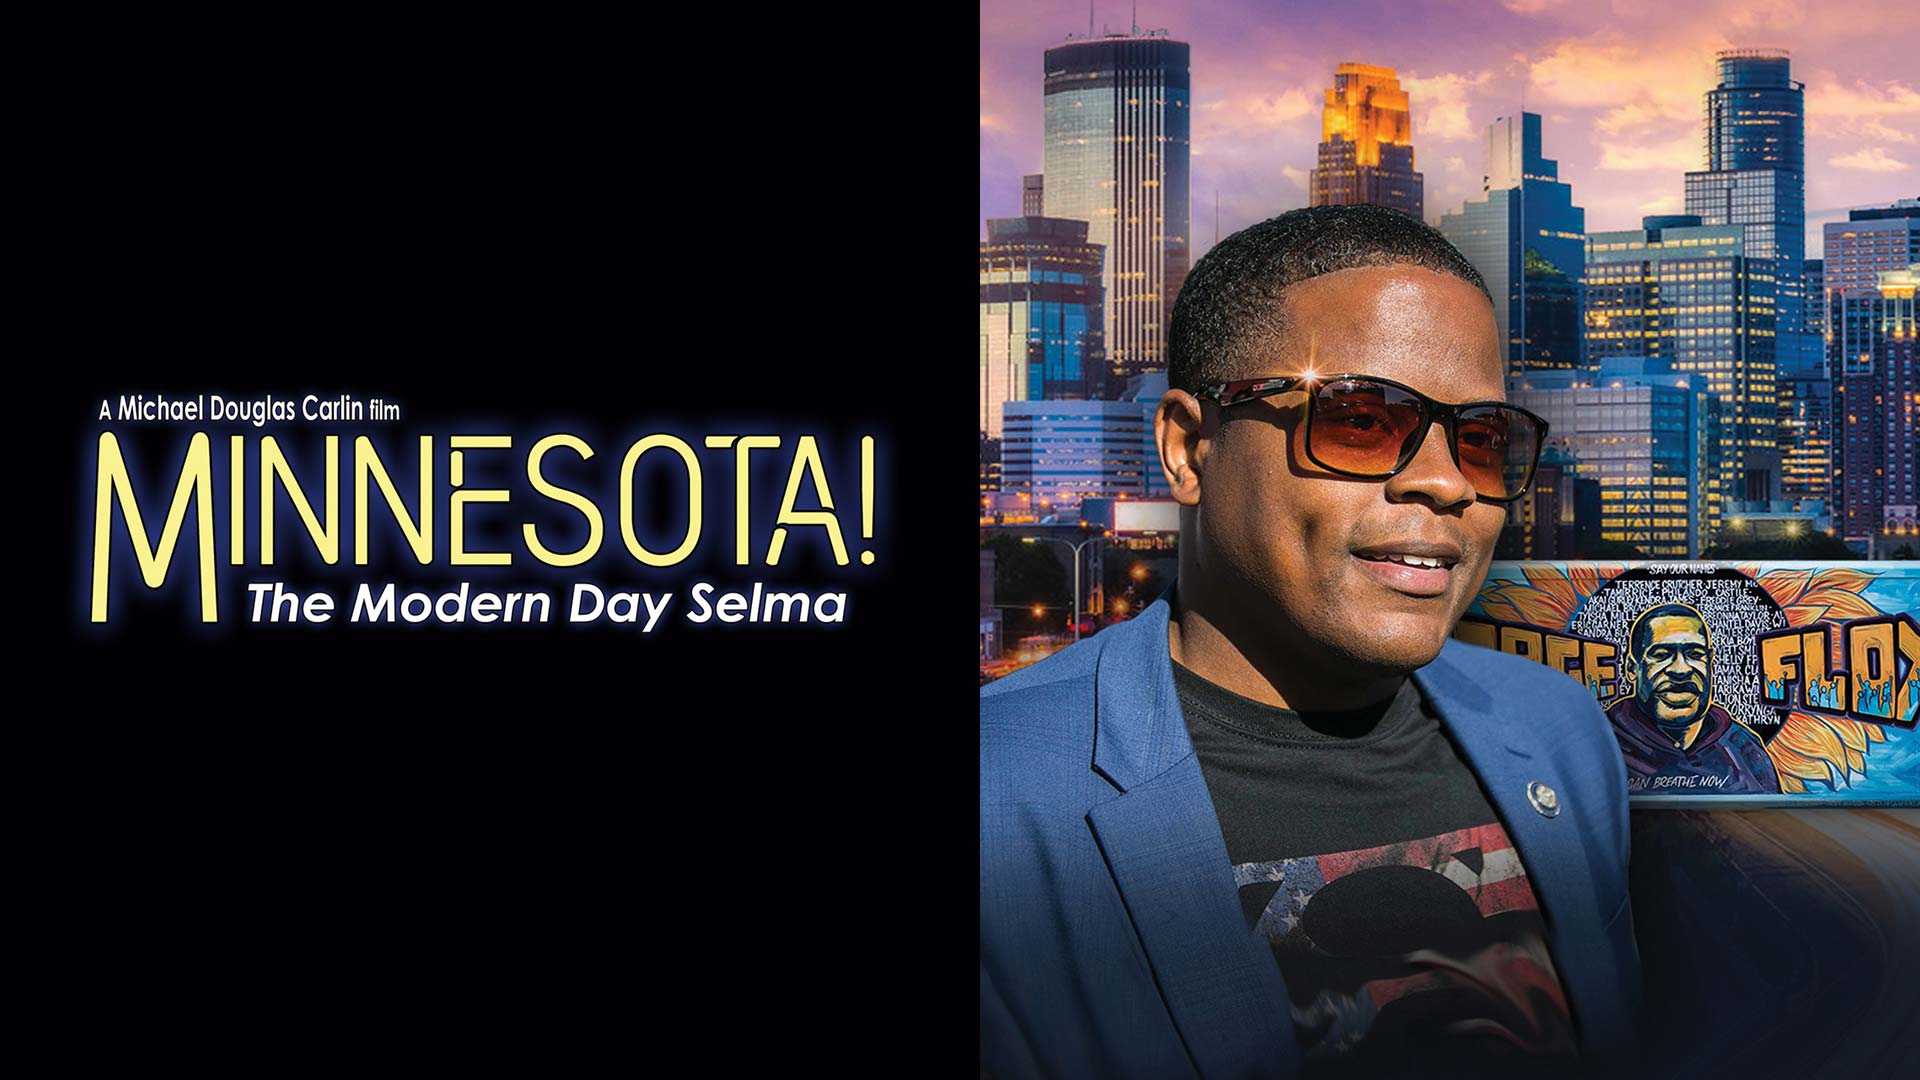 Minnesota! The Modern Day Selma